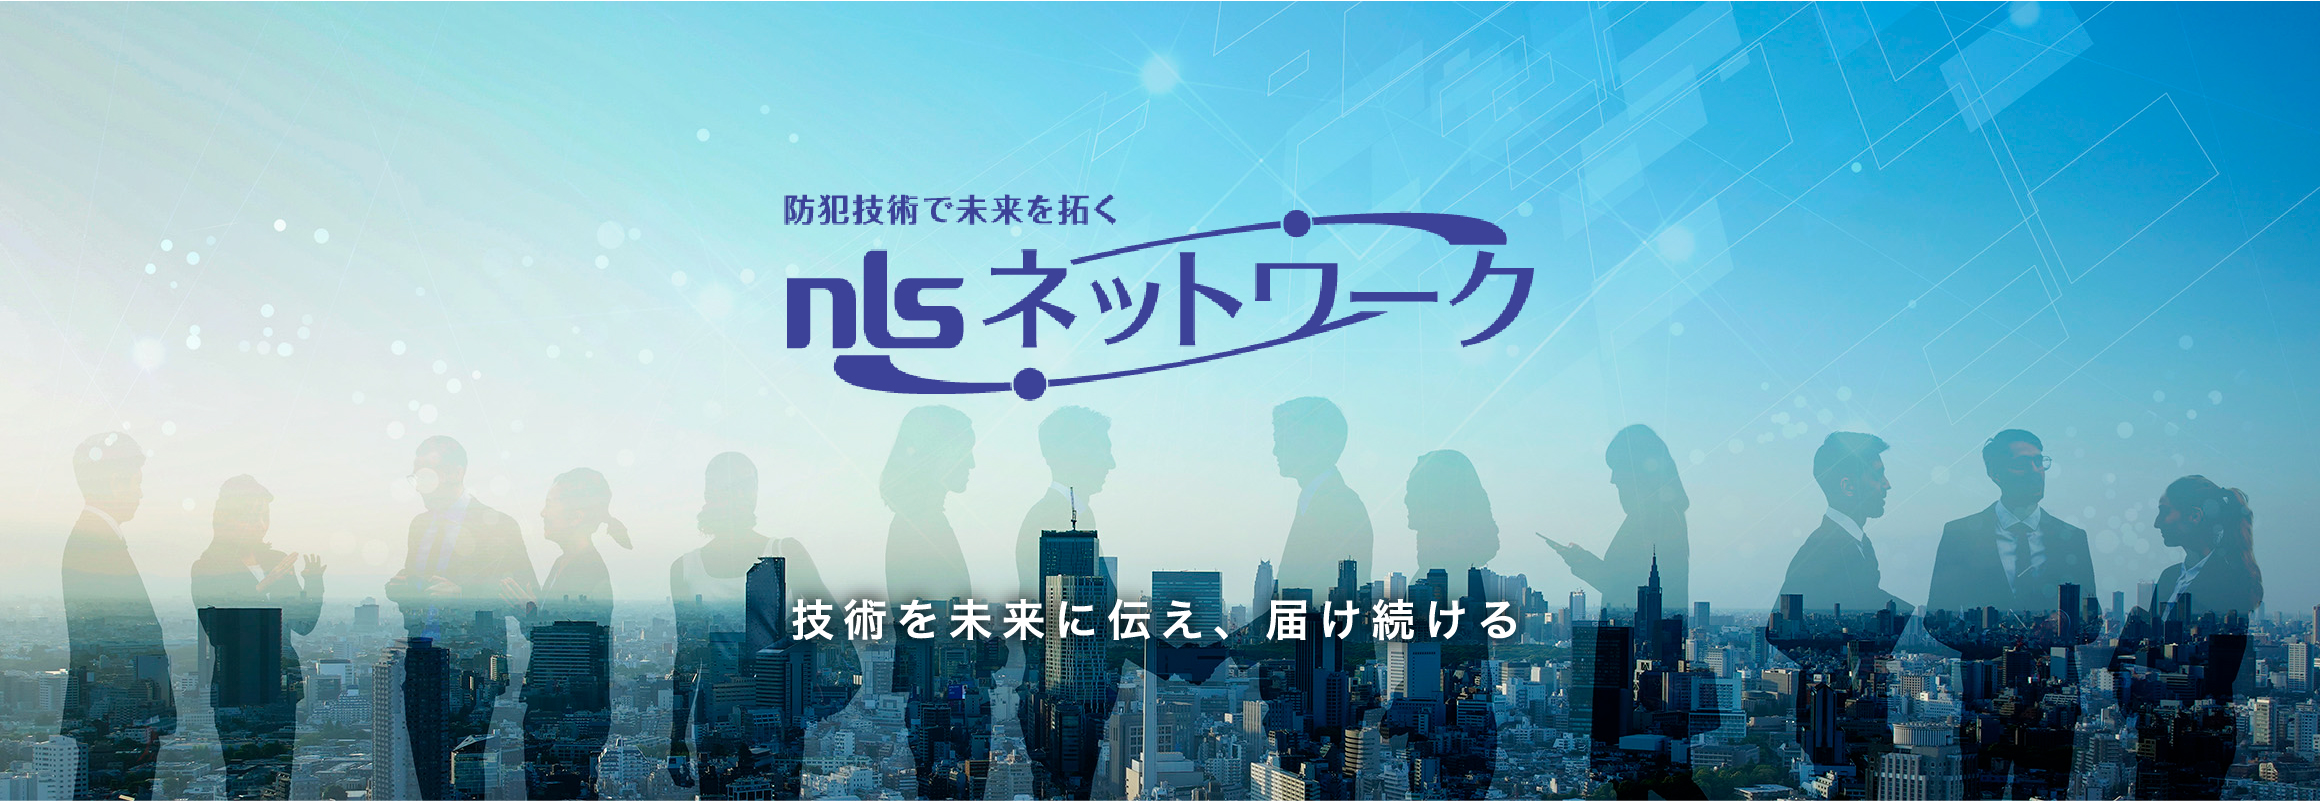 nls network